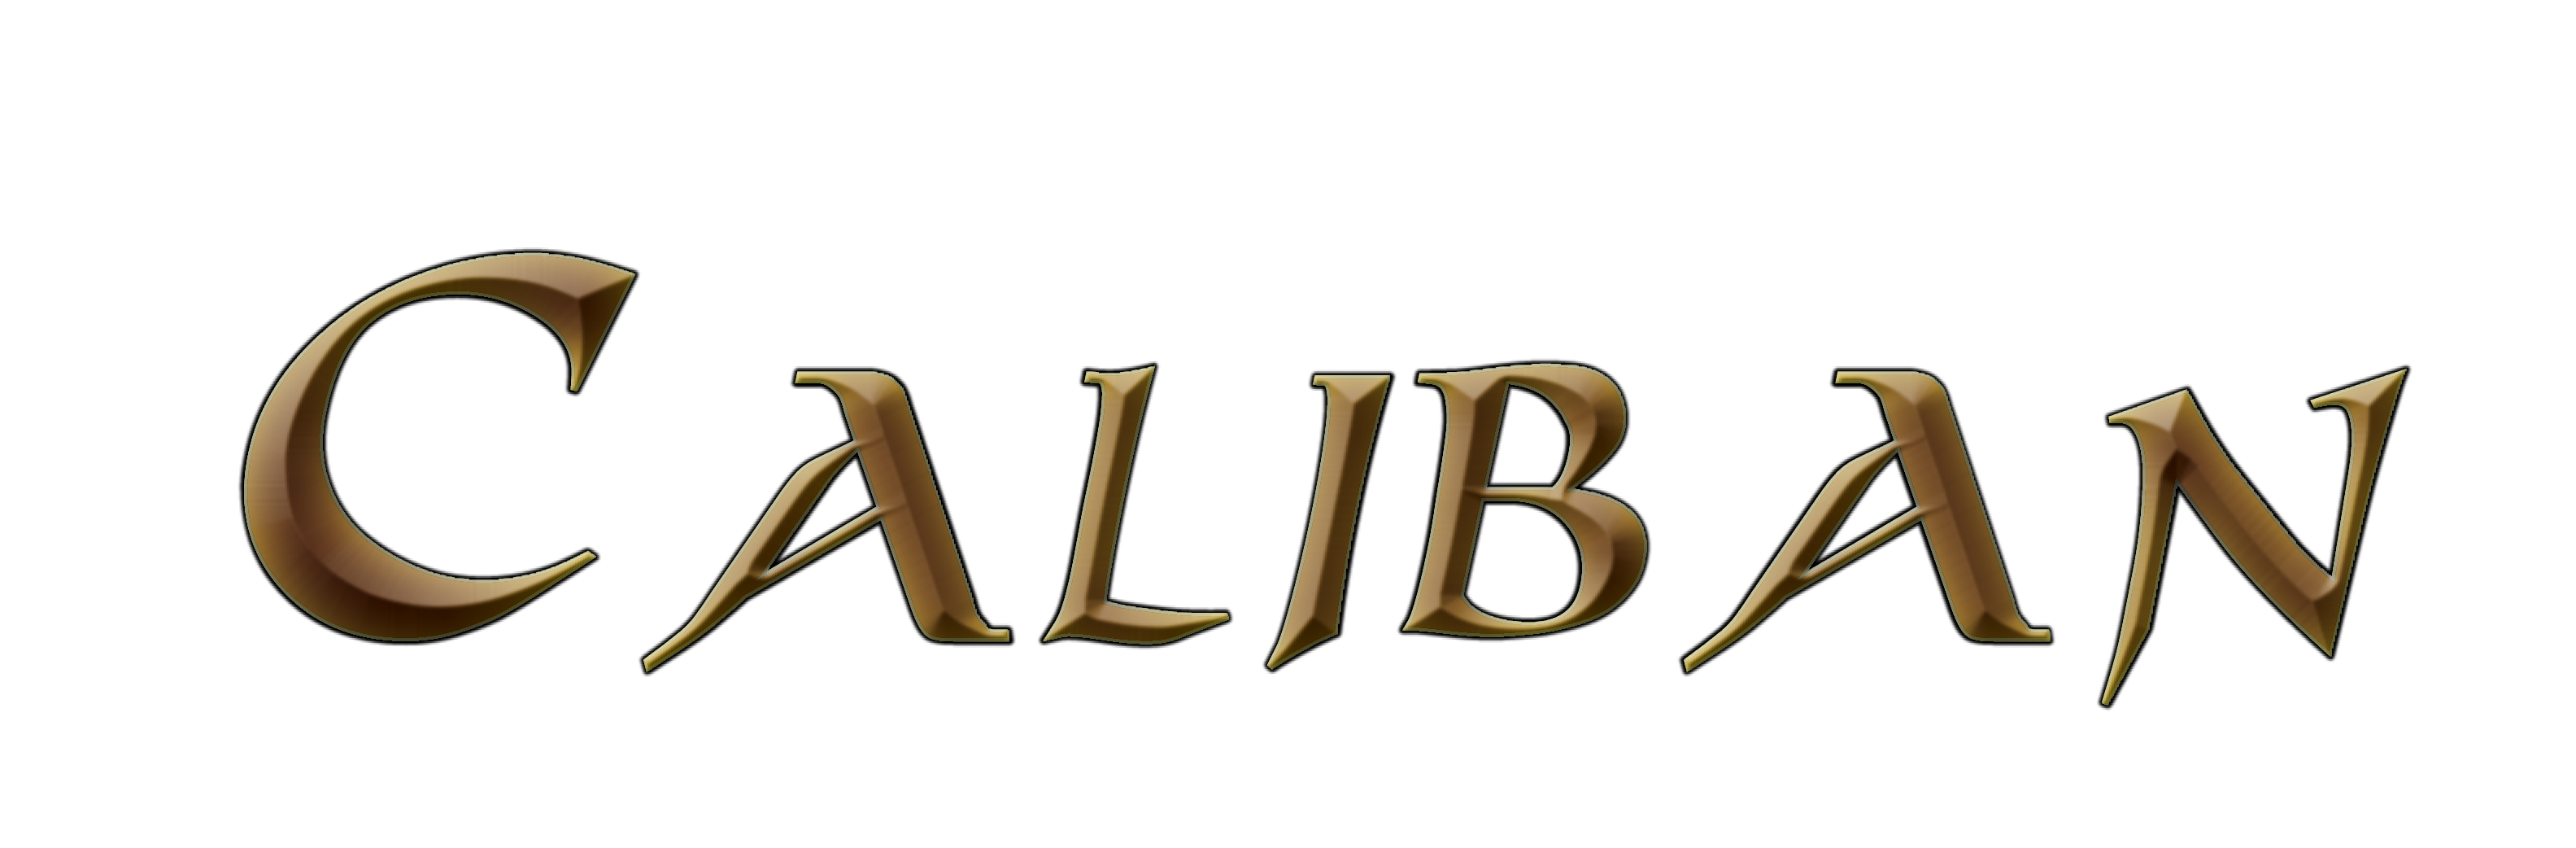 Caliban title.png